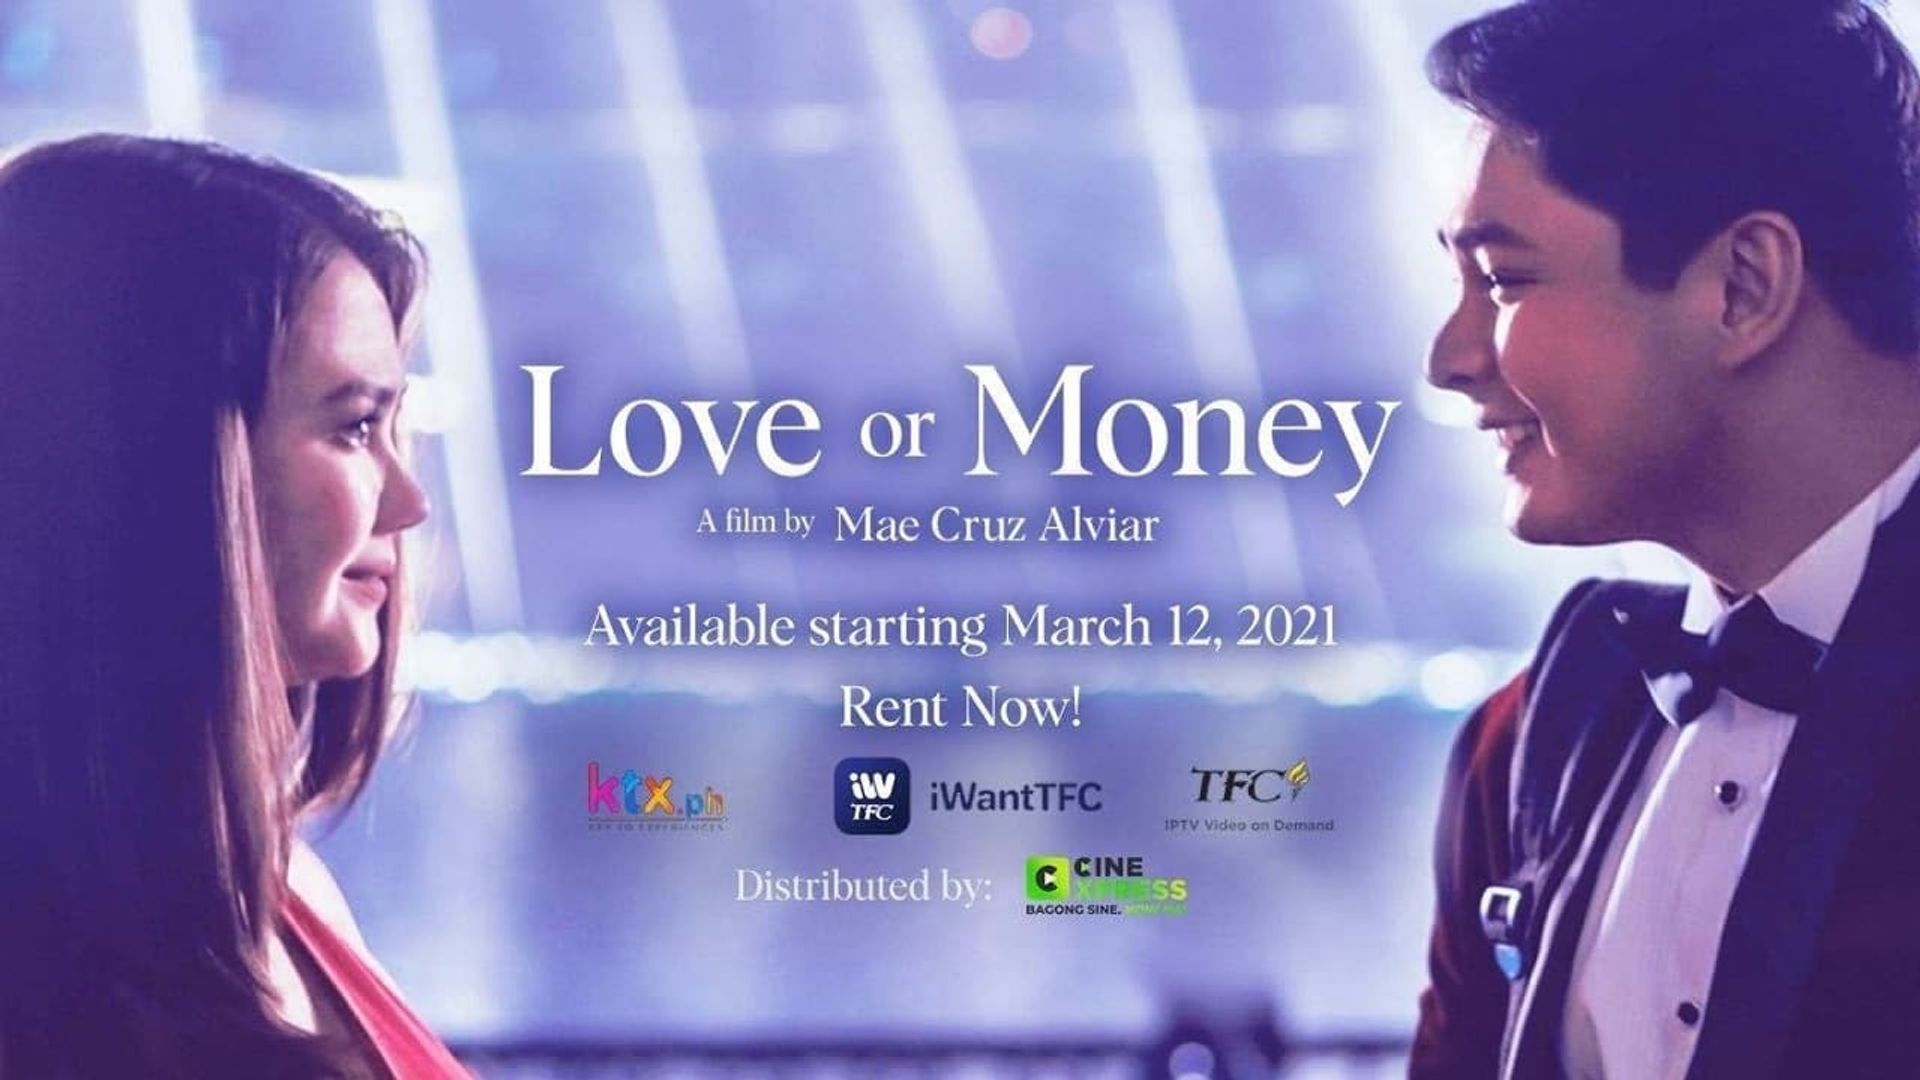 Love or Money background